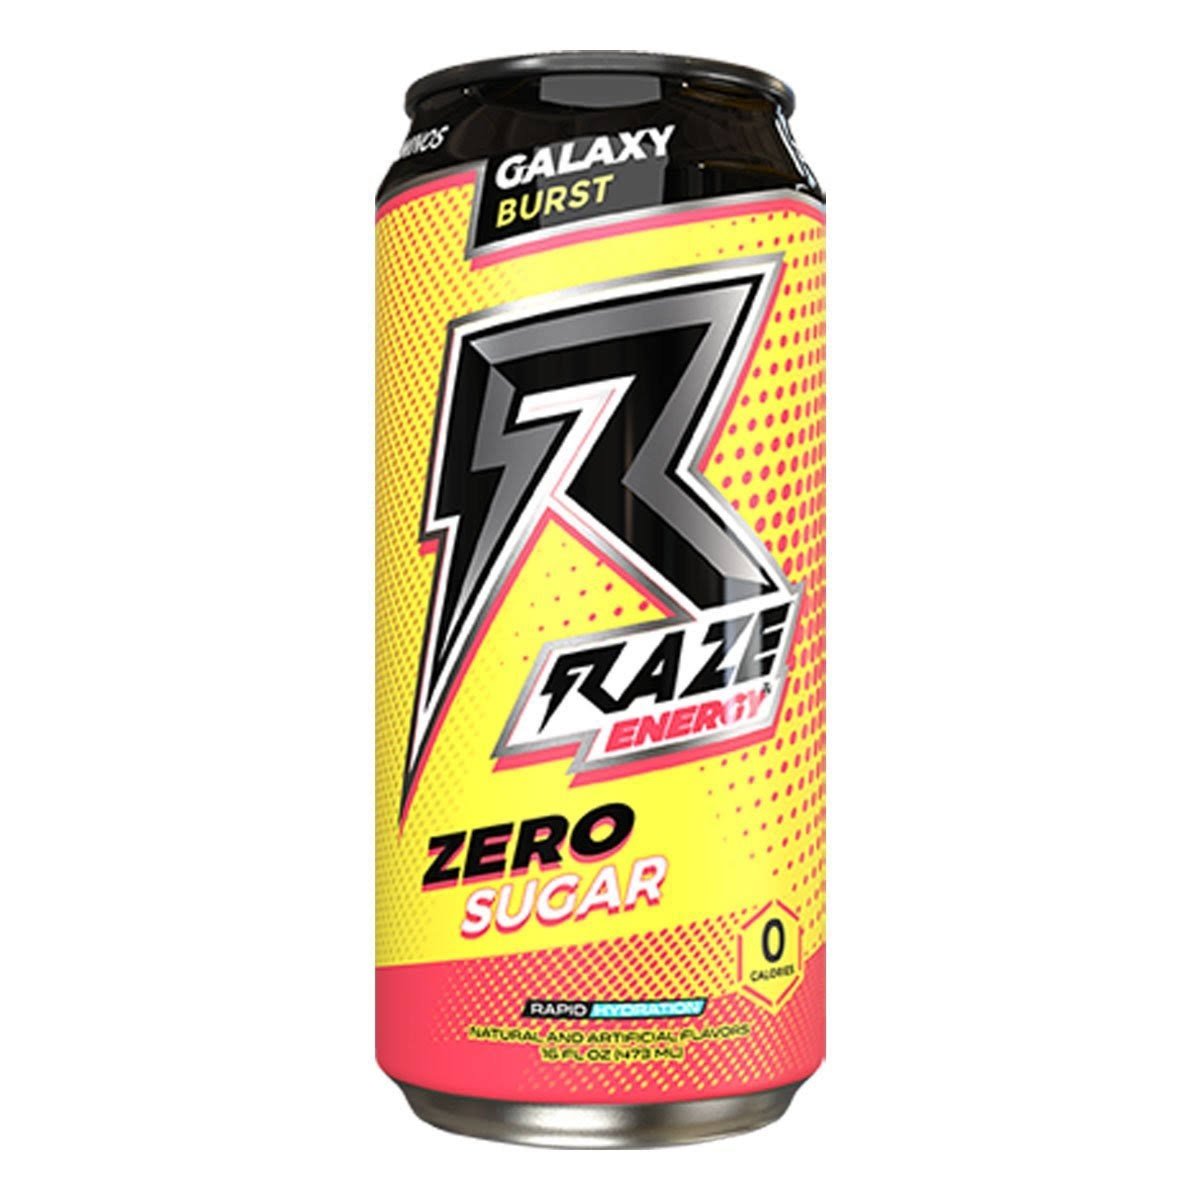 Raze Energy Drink, Galaxy Burst - 16 fl oz